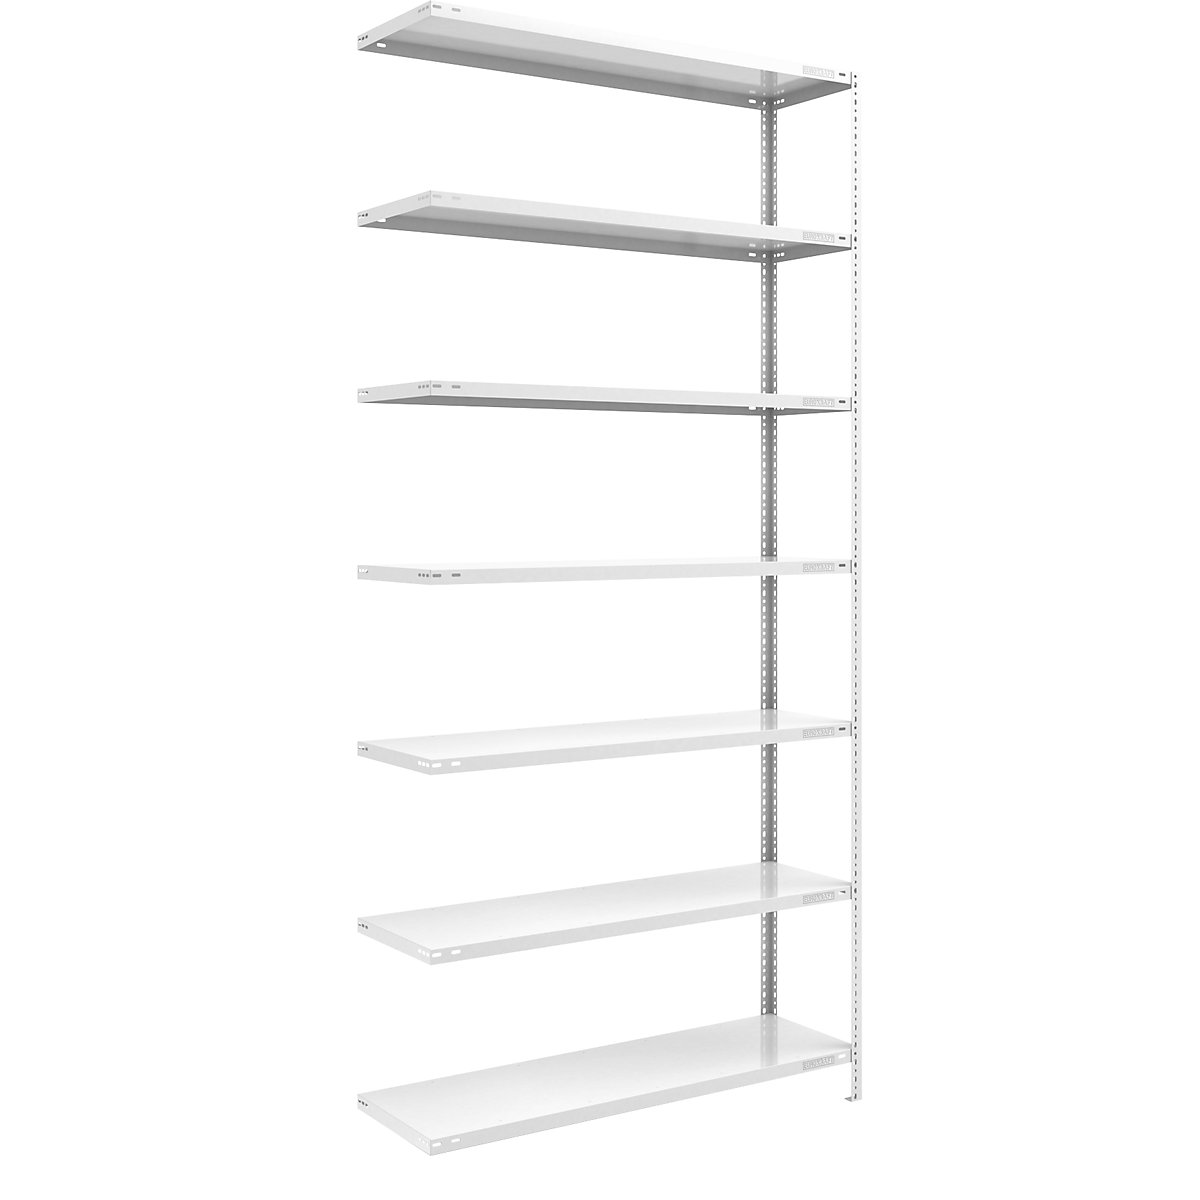 Bolt-together shelf unit, light duty, plastic coated – eurokraft pro, shelf unit height 3000 mm, shelf width 1300 mm, depth 500 mm, extension shelf unit-7